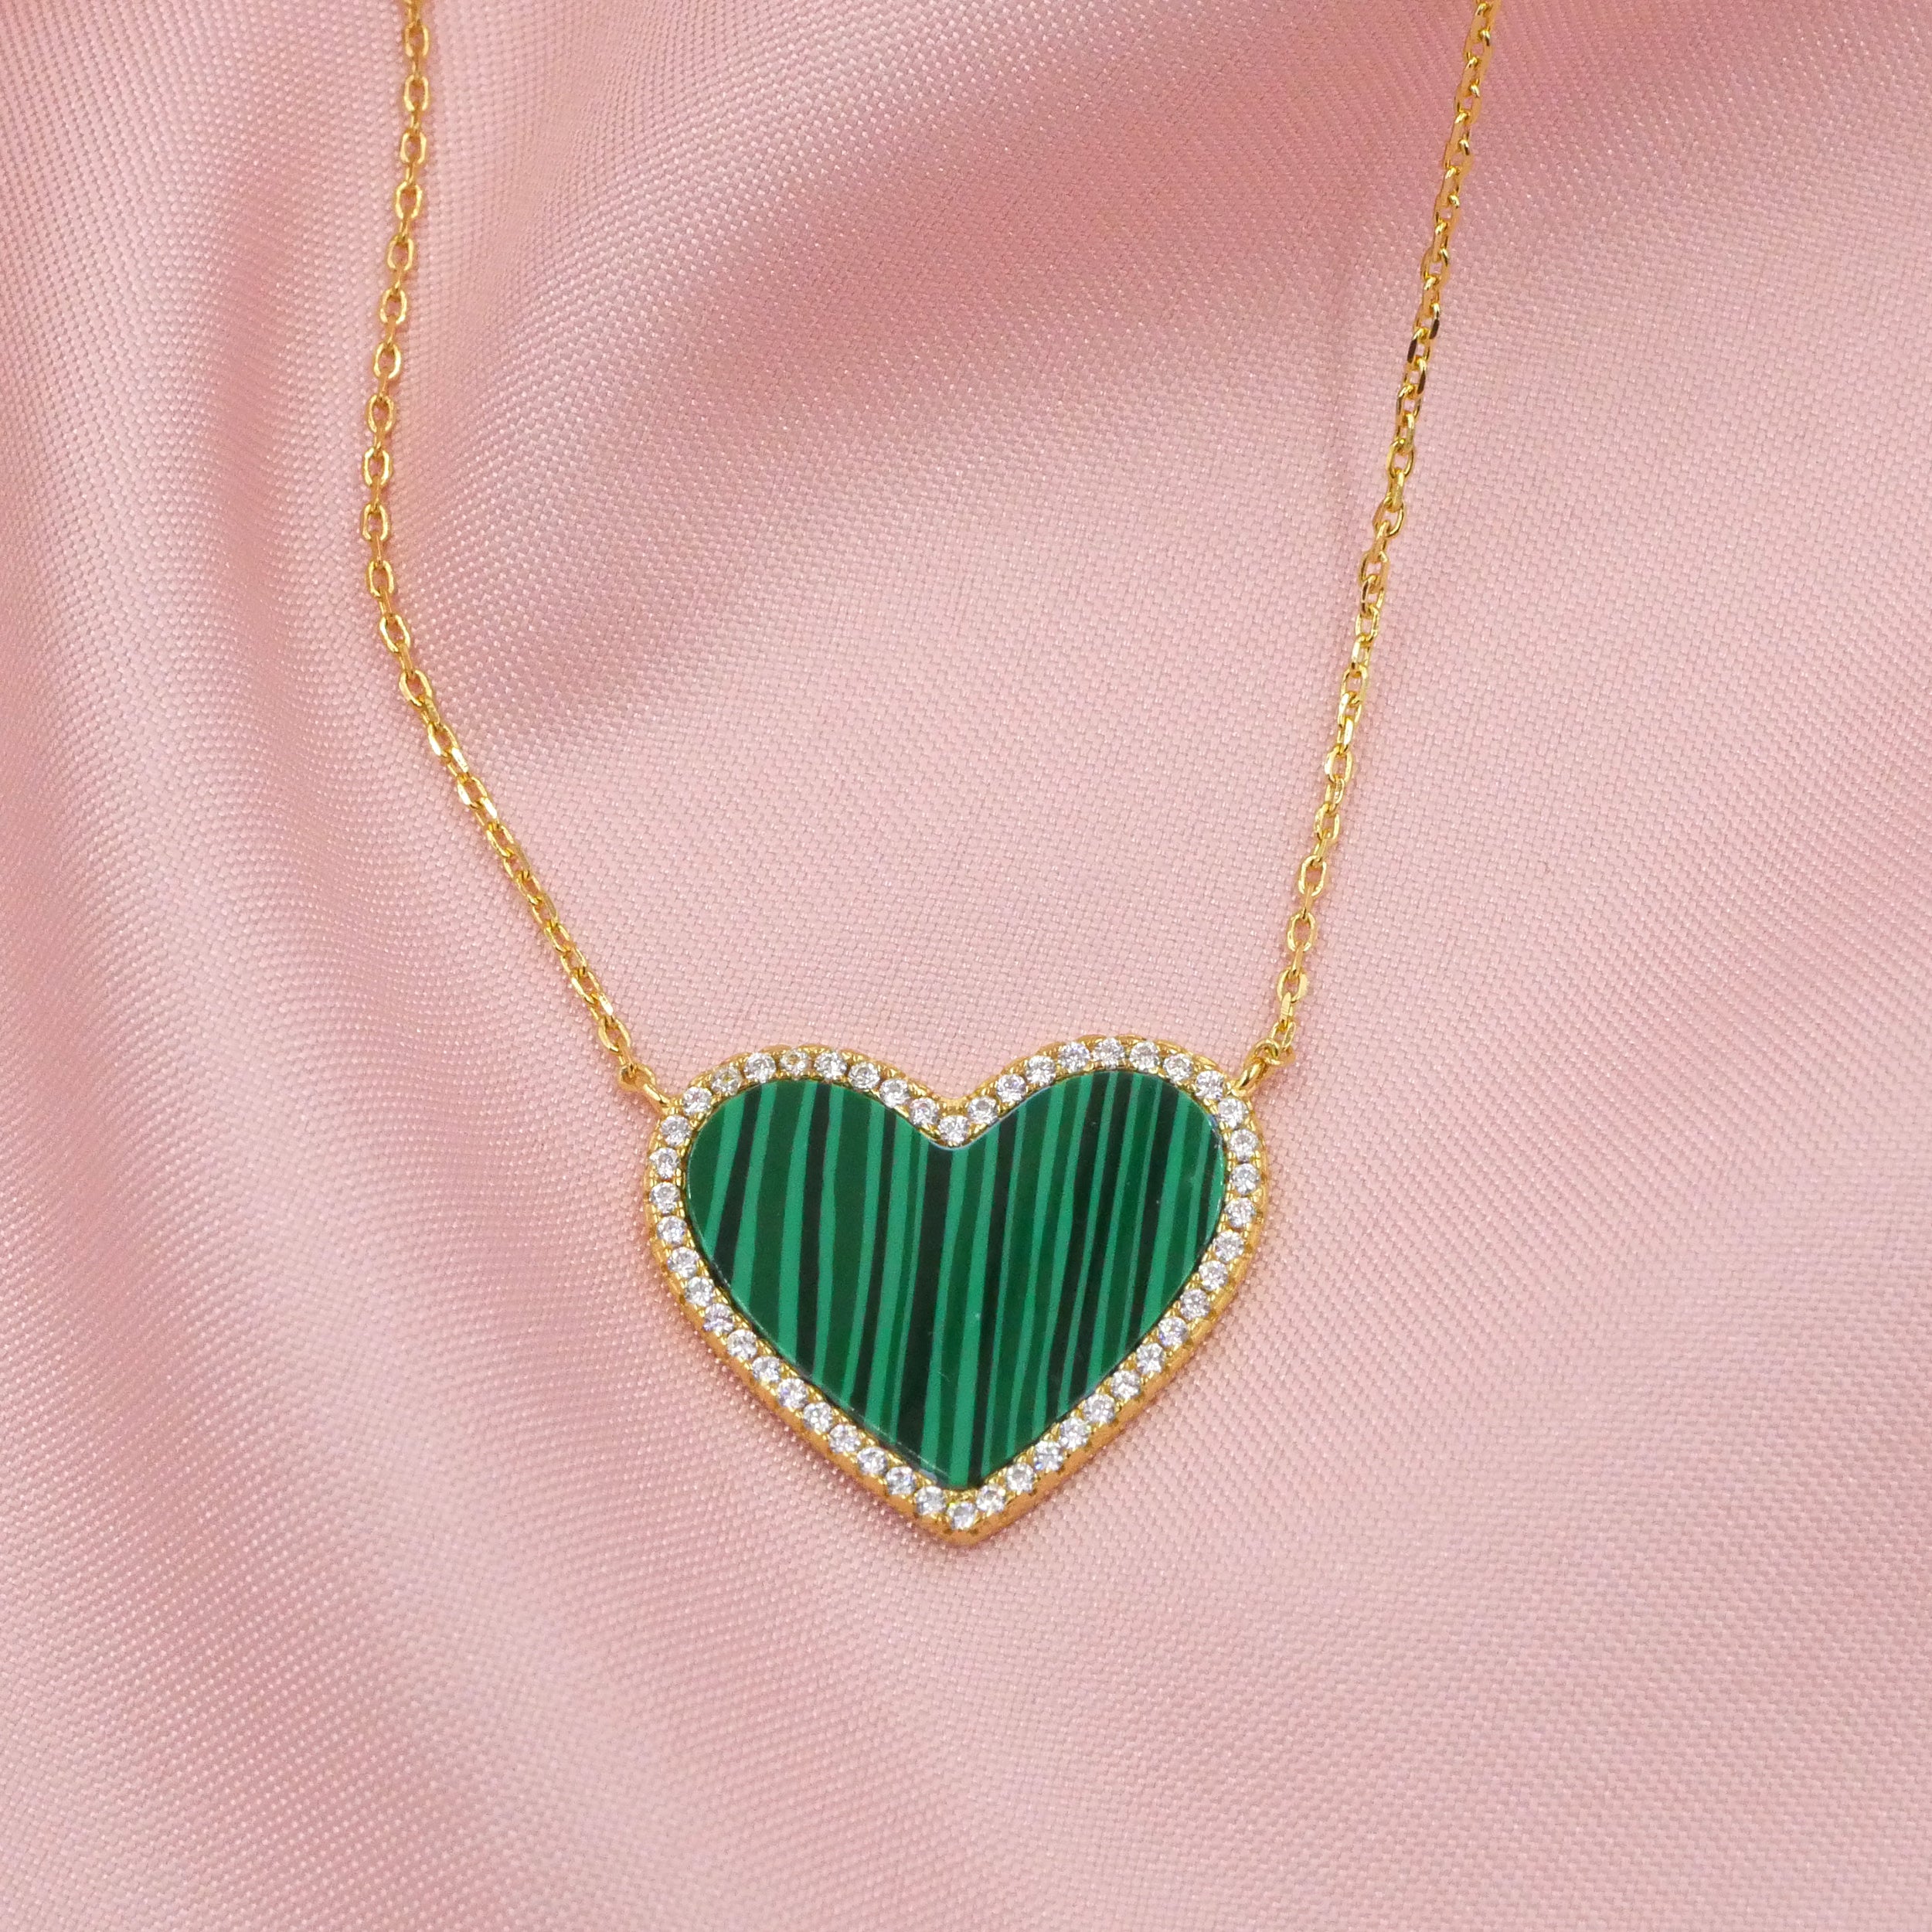 Real Natural Malachite Stone Pendant Necklace Healing Green Stone Heart  Shaped Pendulum Charm Stainless Steel Chain Women Choker